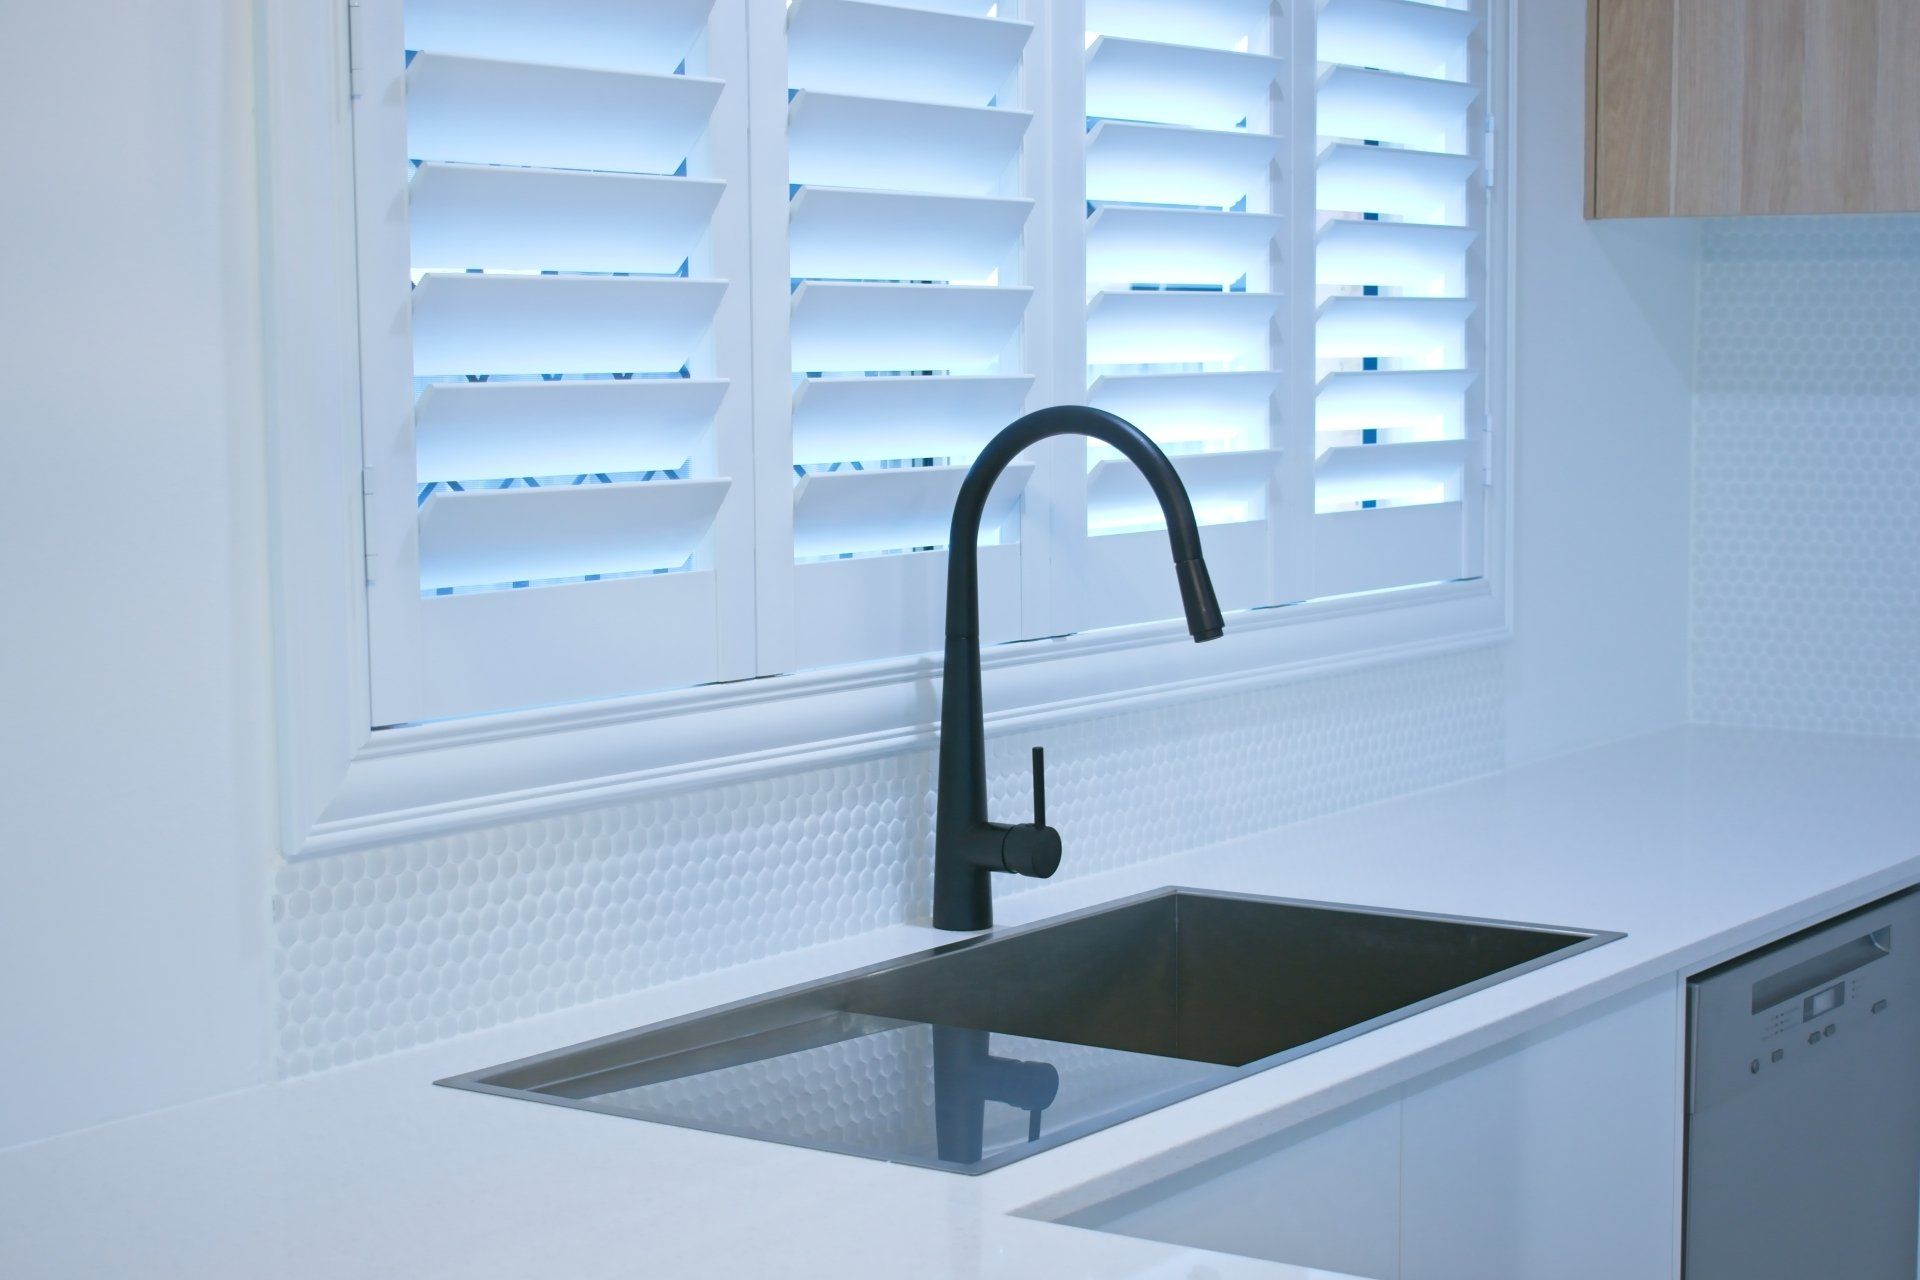 White plantation shutters in white kitchen, over kitchen sink with stylish black mixer tap.